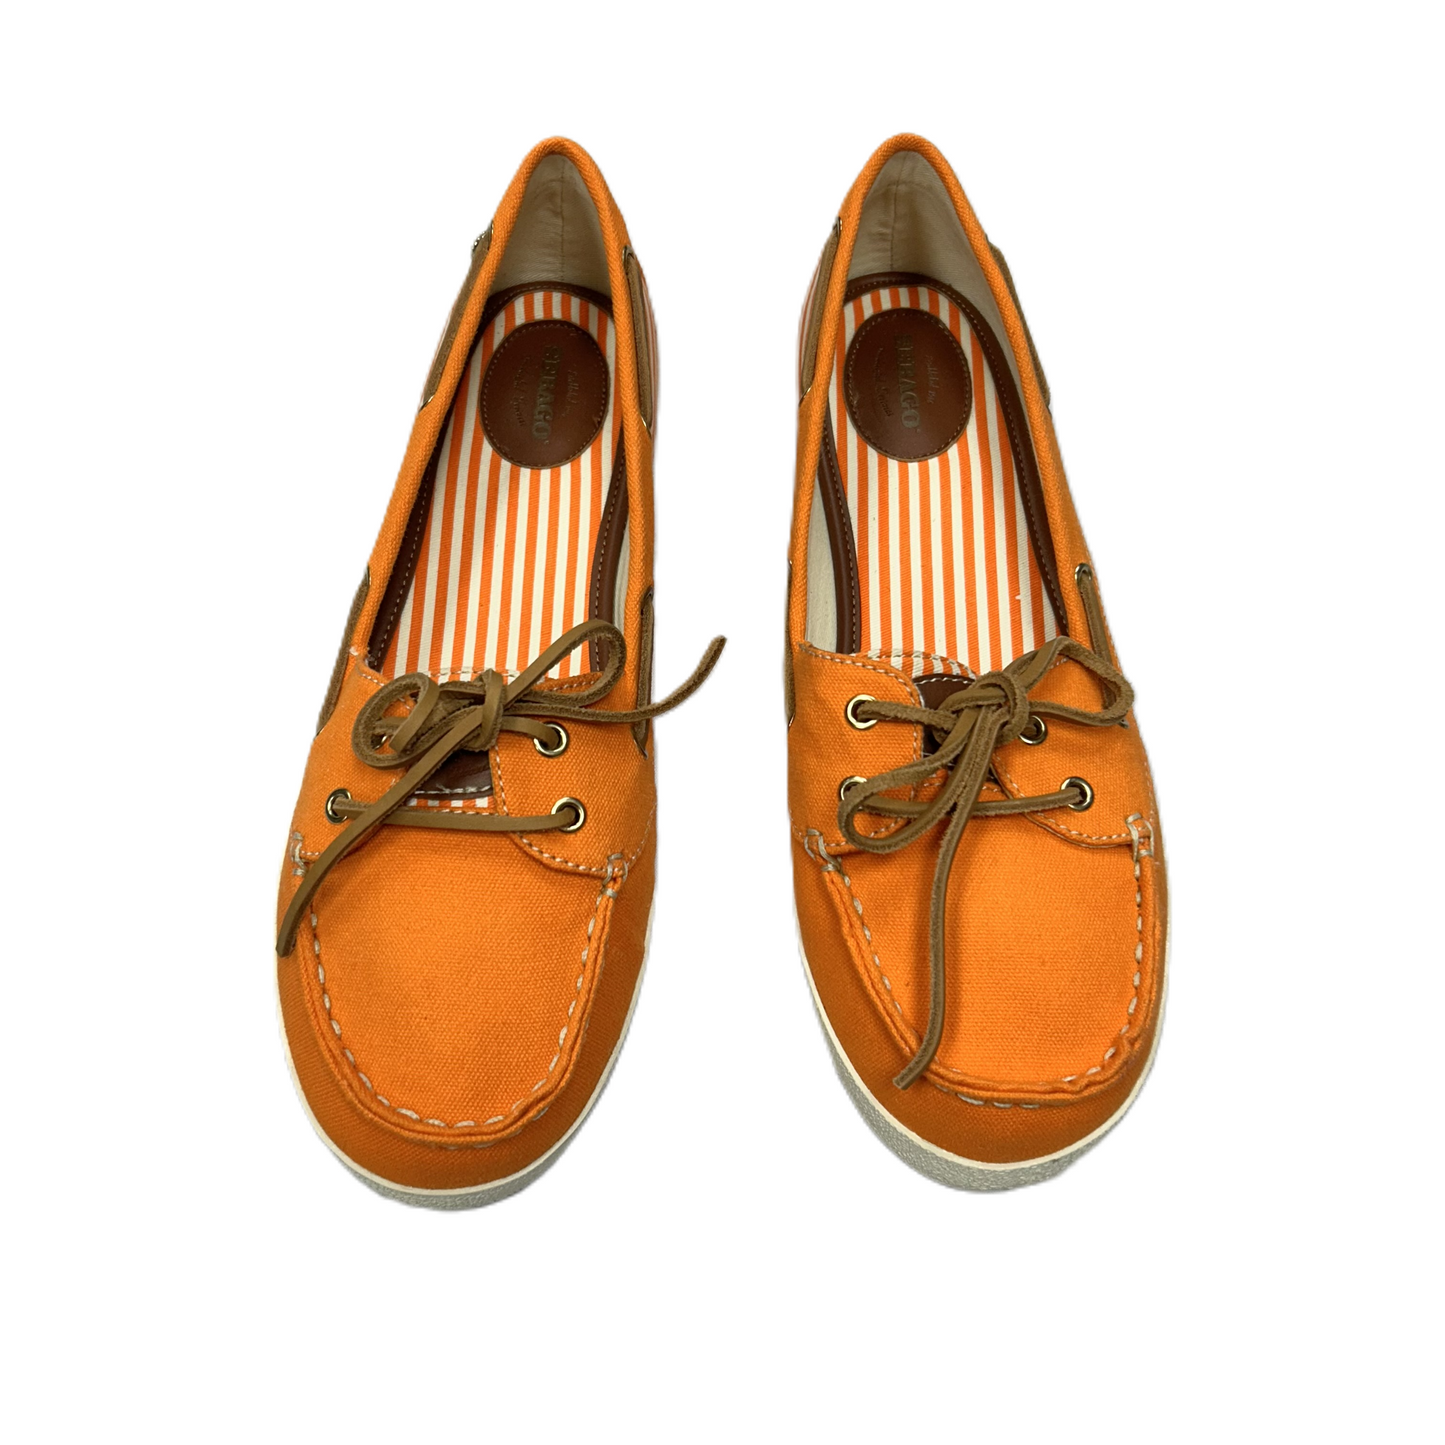 Shoes Flats By Sebago  Size: 10